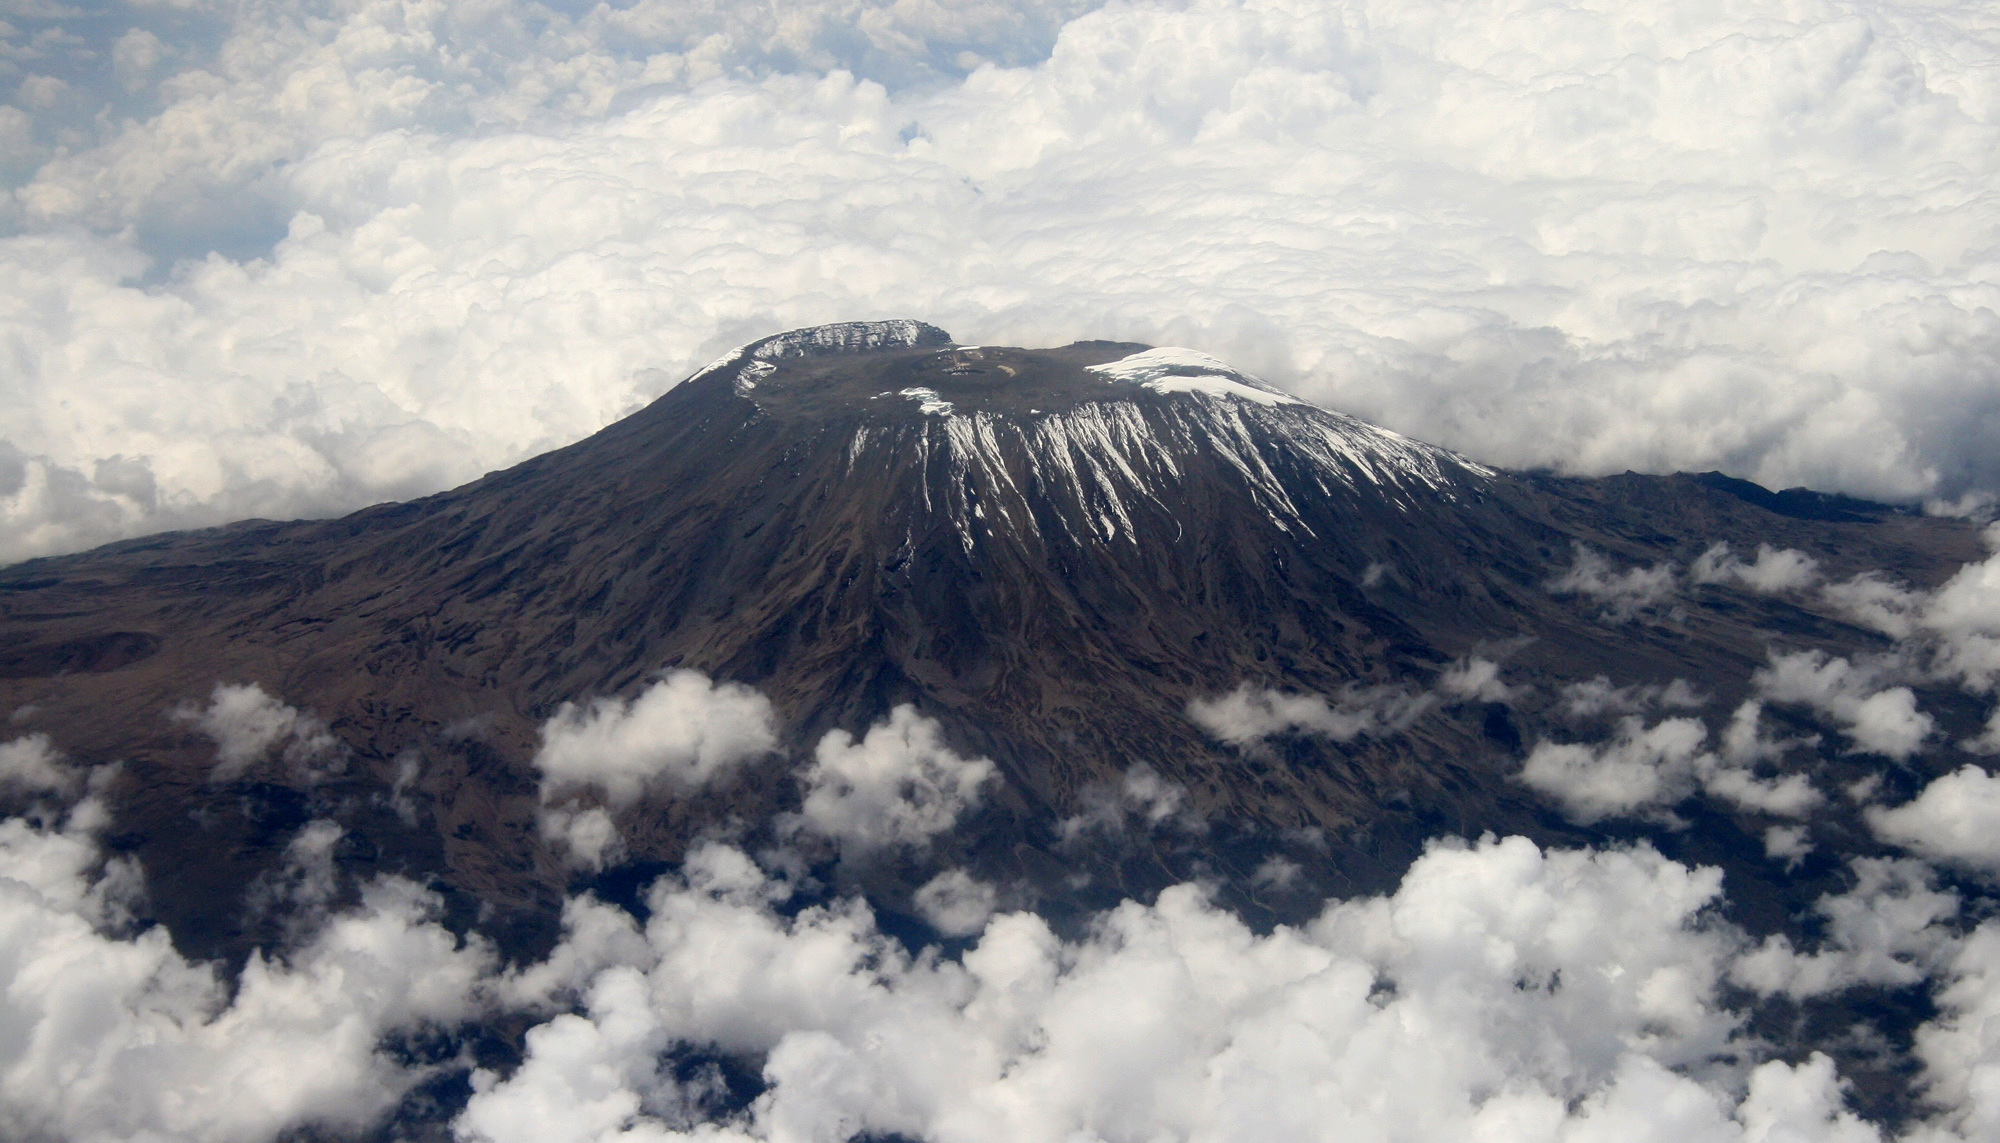 Mount_Kilimanjaro_Dec_2009_edit1